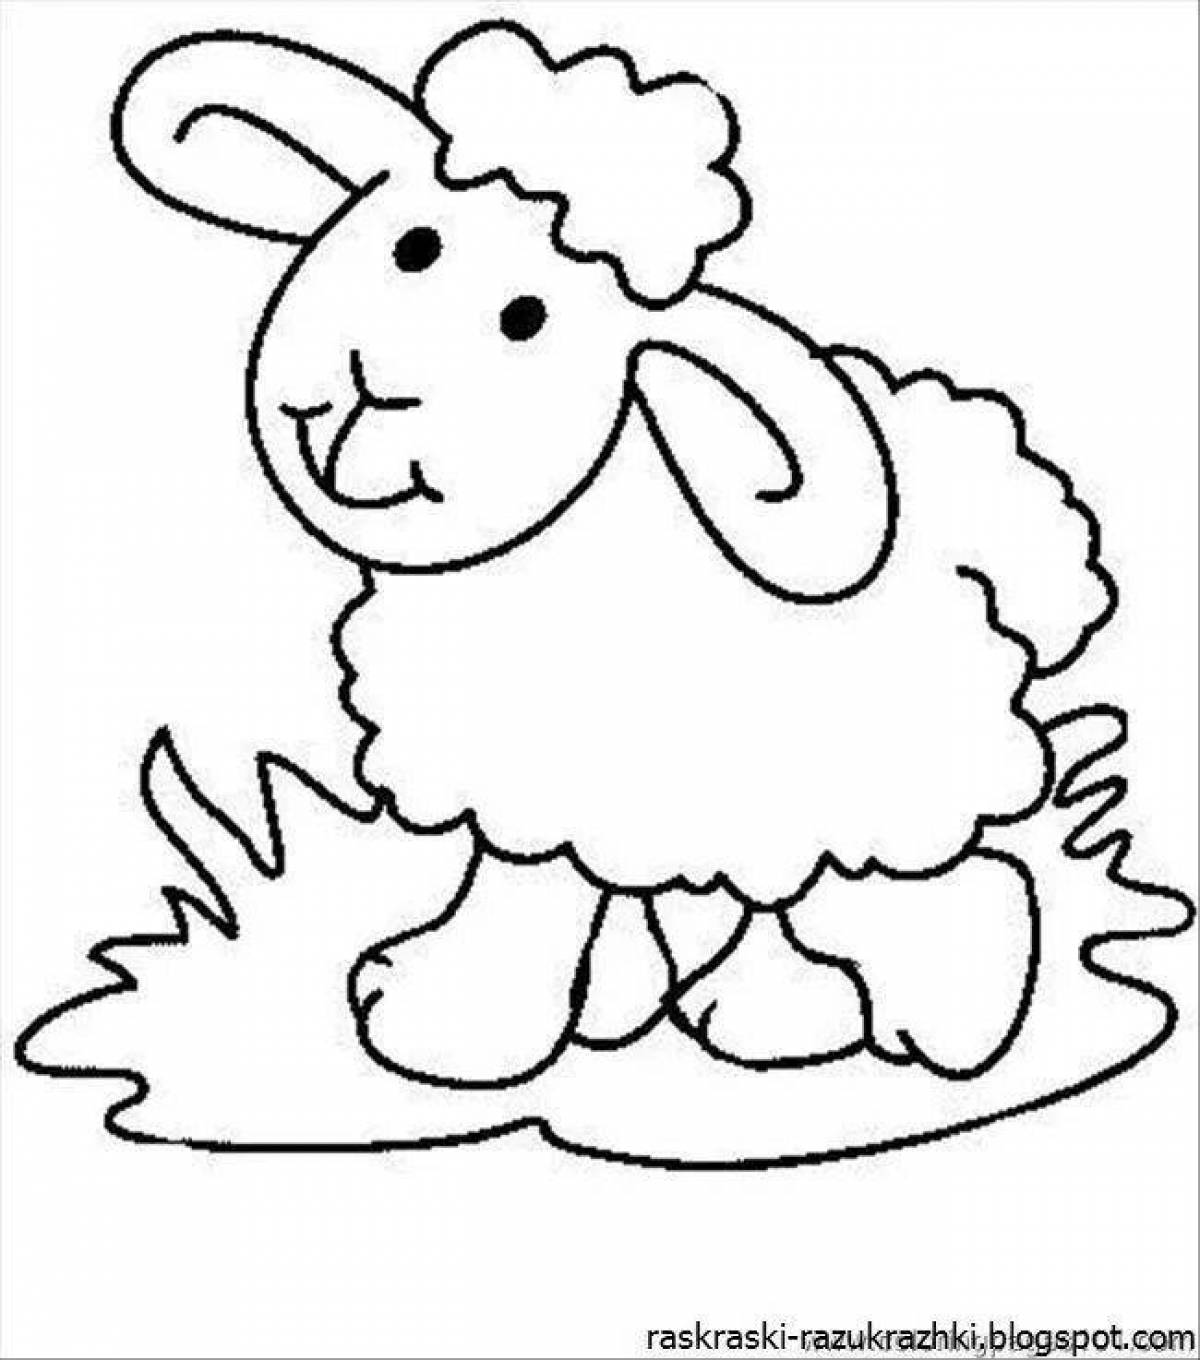 Cute lamb coloring book